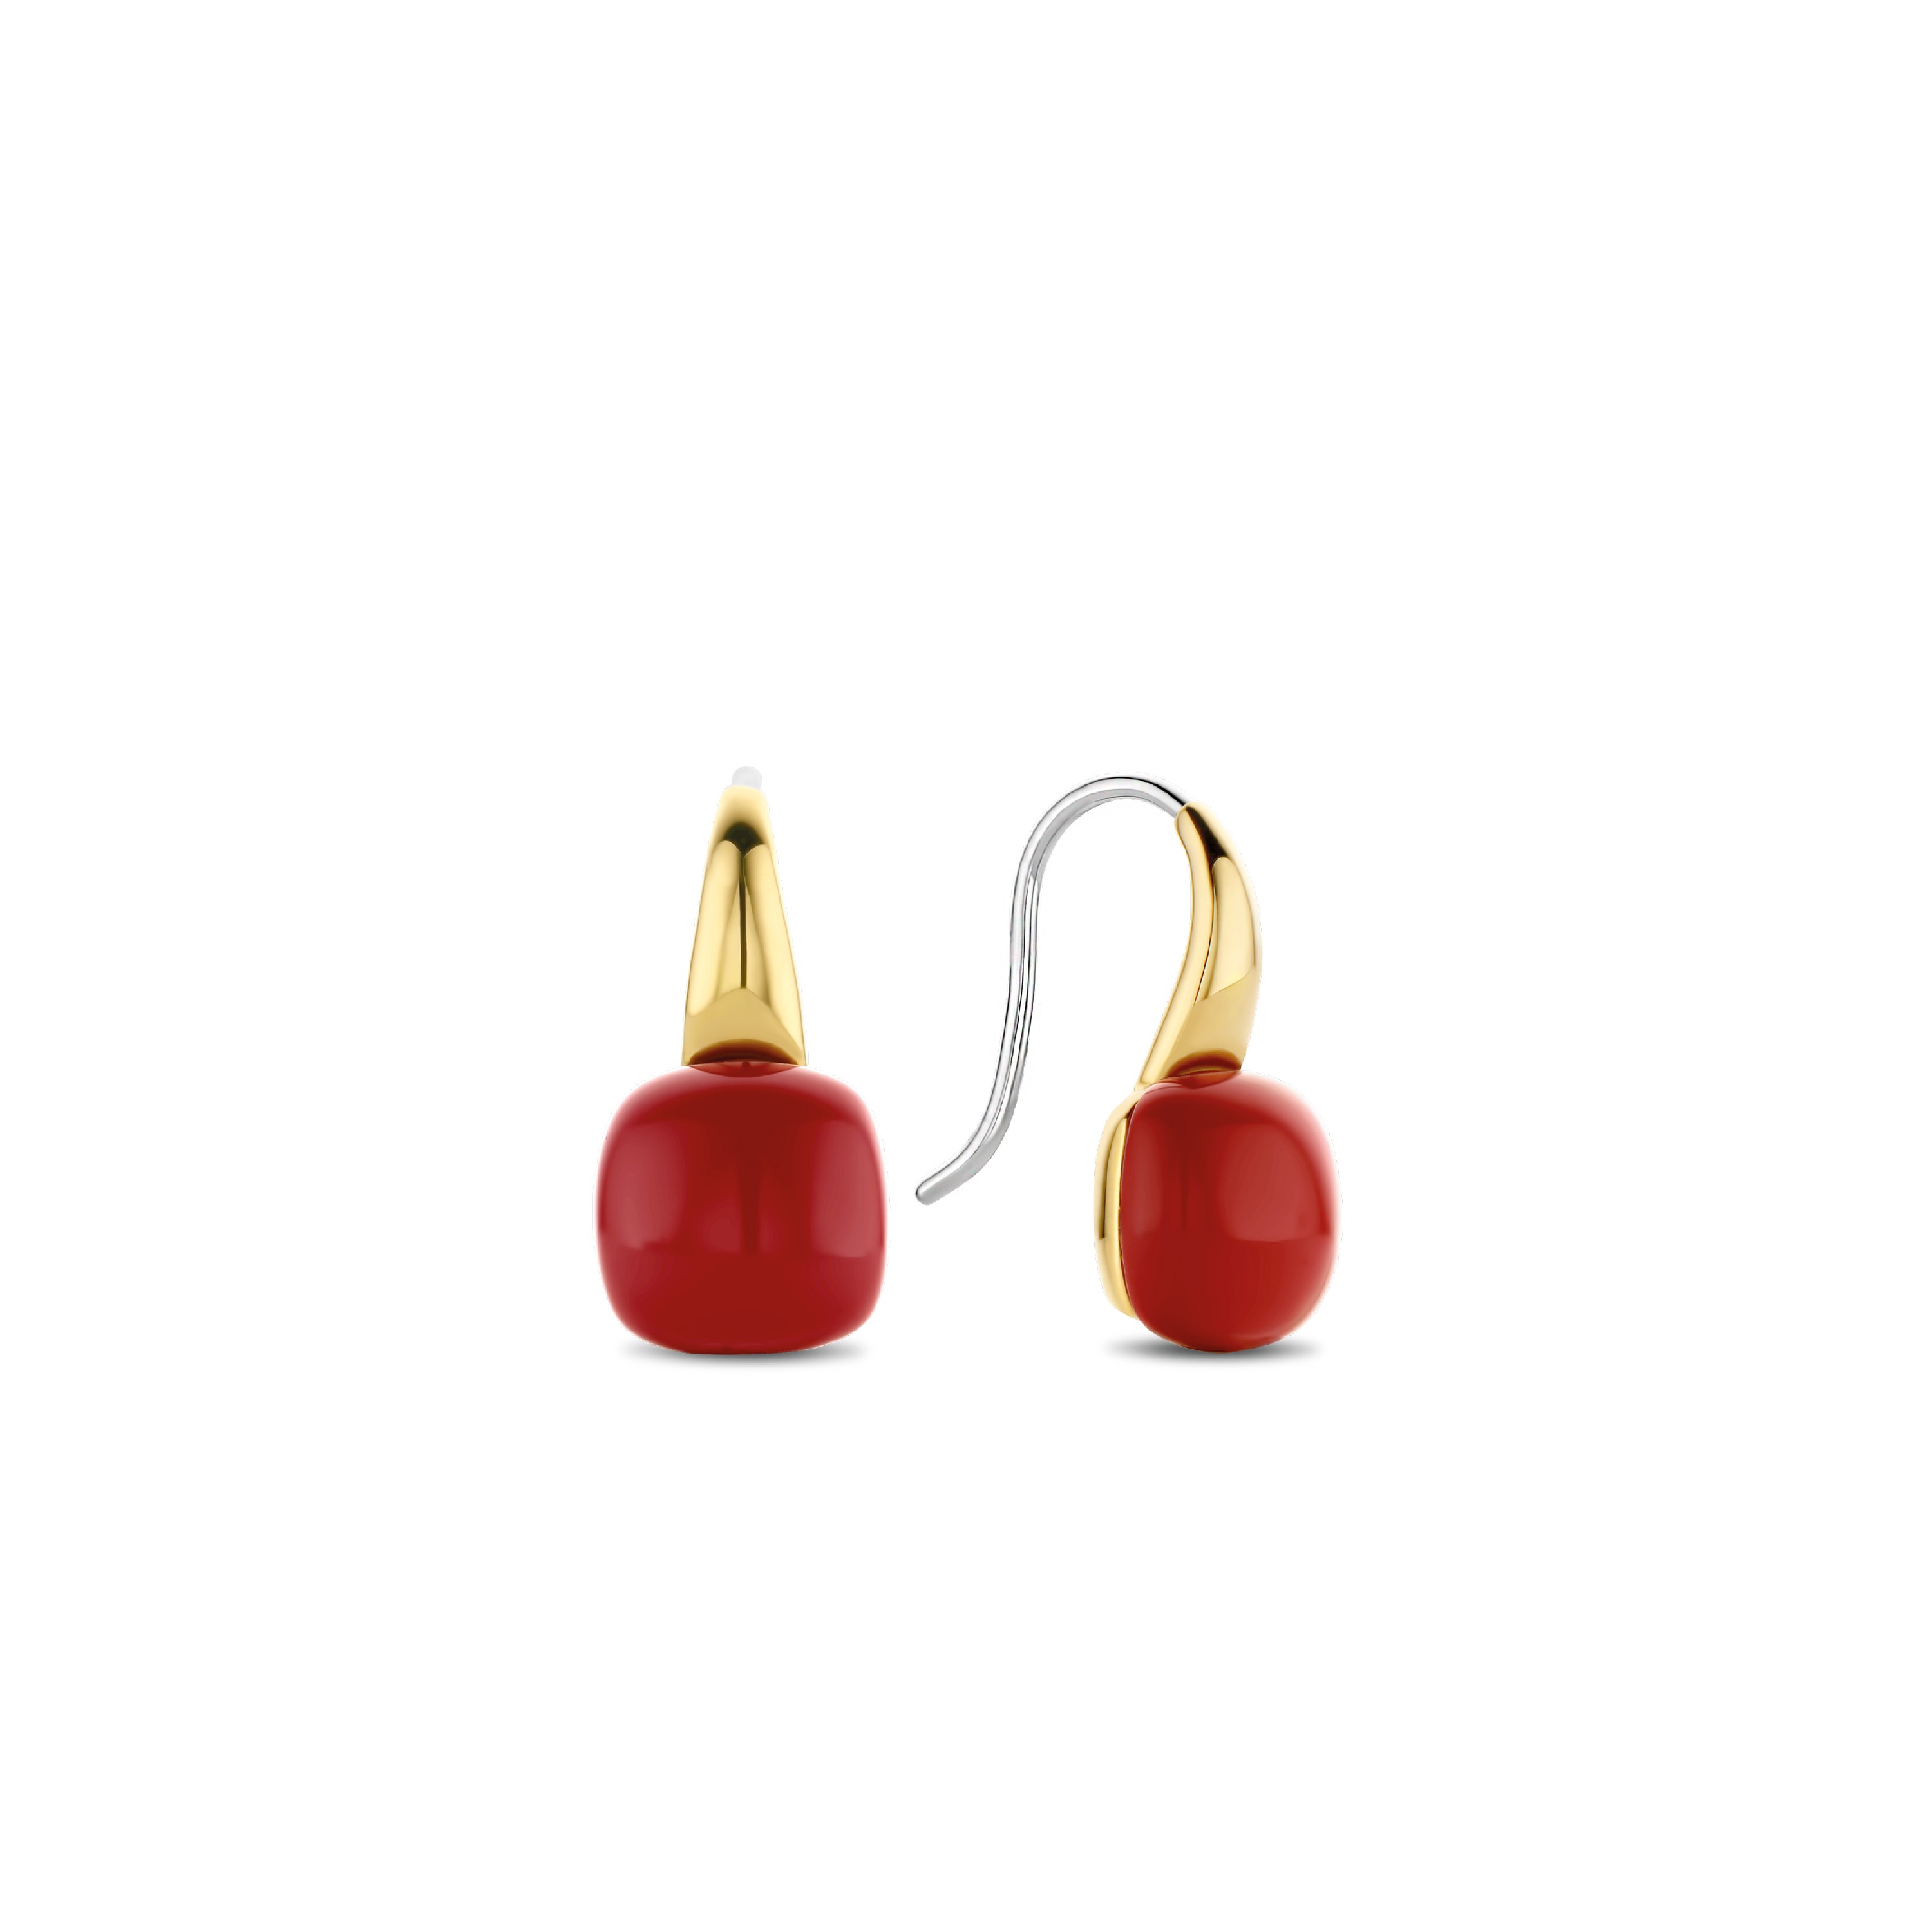 TI SENTO - Milano Earrings 7815CR Gala Jewelers Inc. White Oak, PA